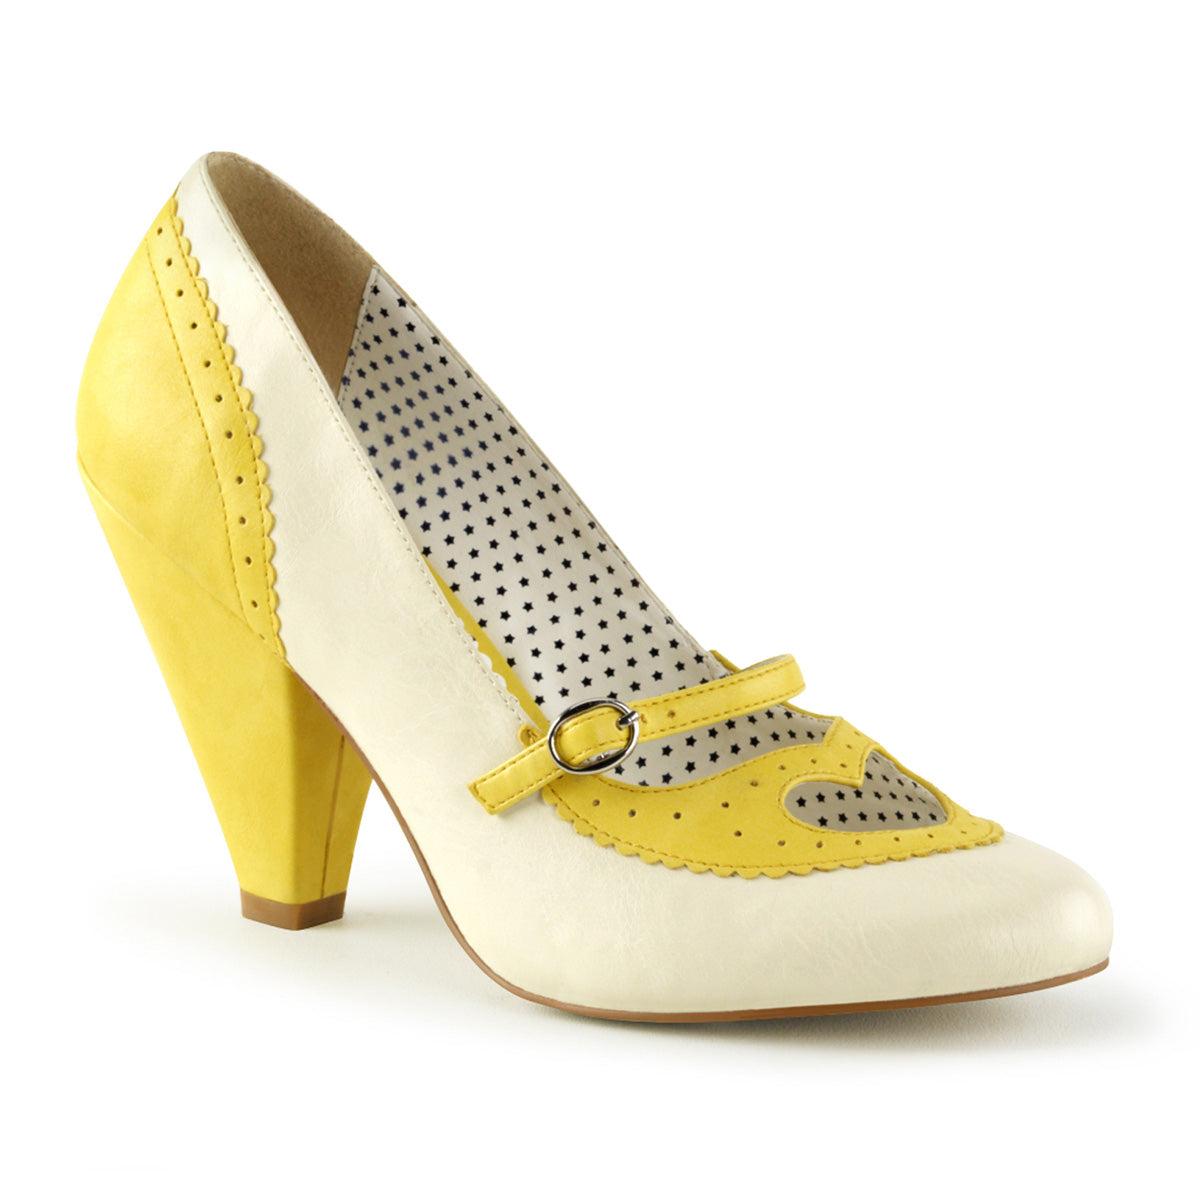 Poppy-18 Pin Up Couture Glamour 4 "каблука желтая фетиш обувь